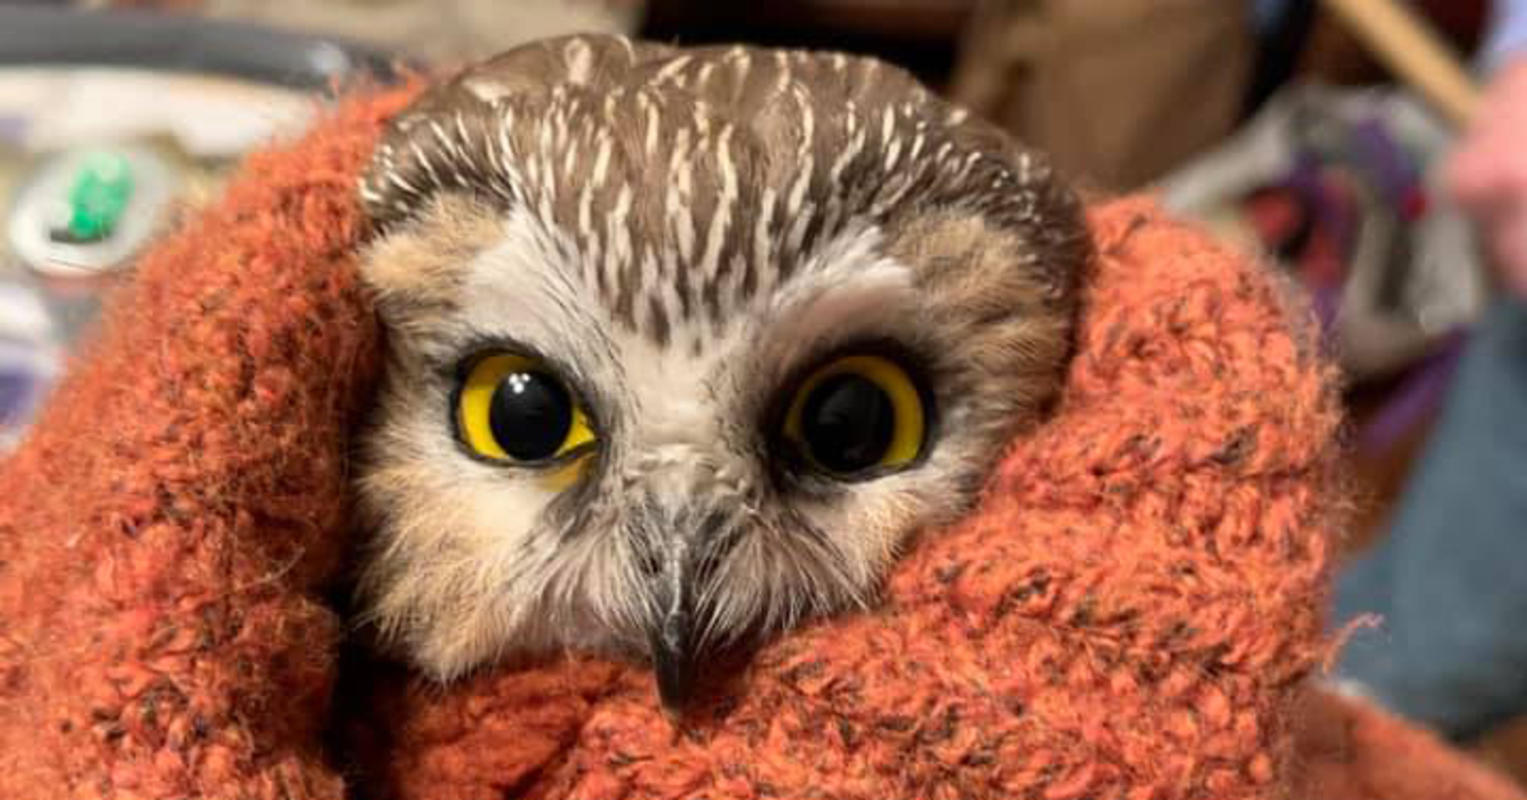 The tiny owl found inside the 2020 Rockefeller Center Christmas tree